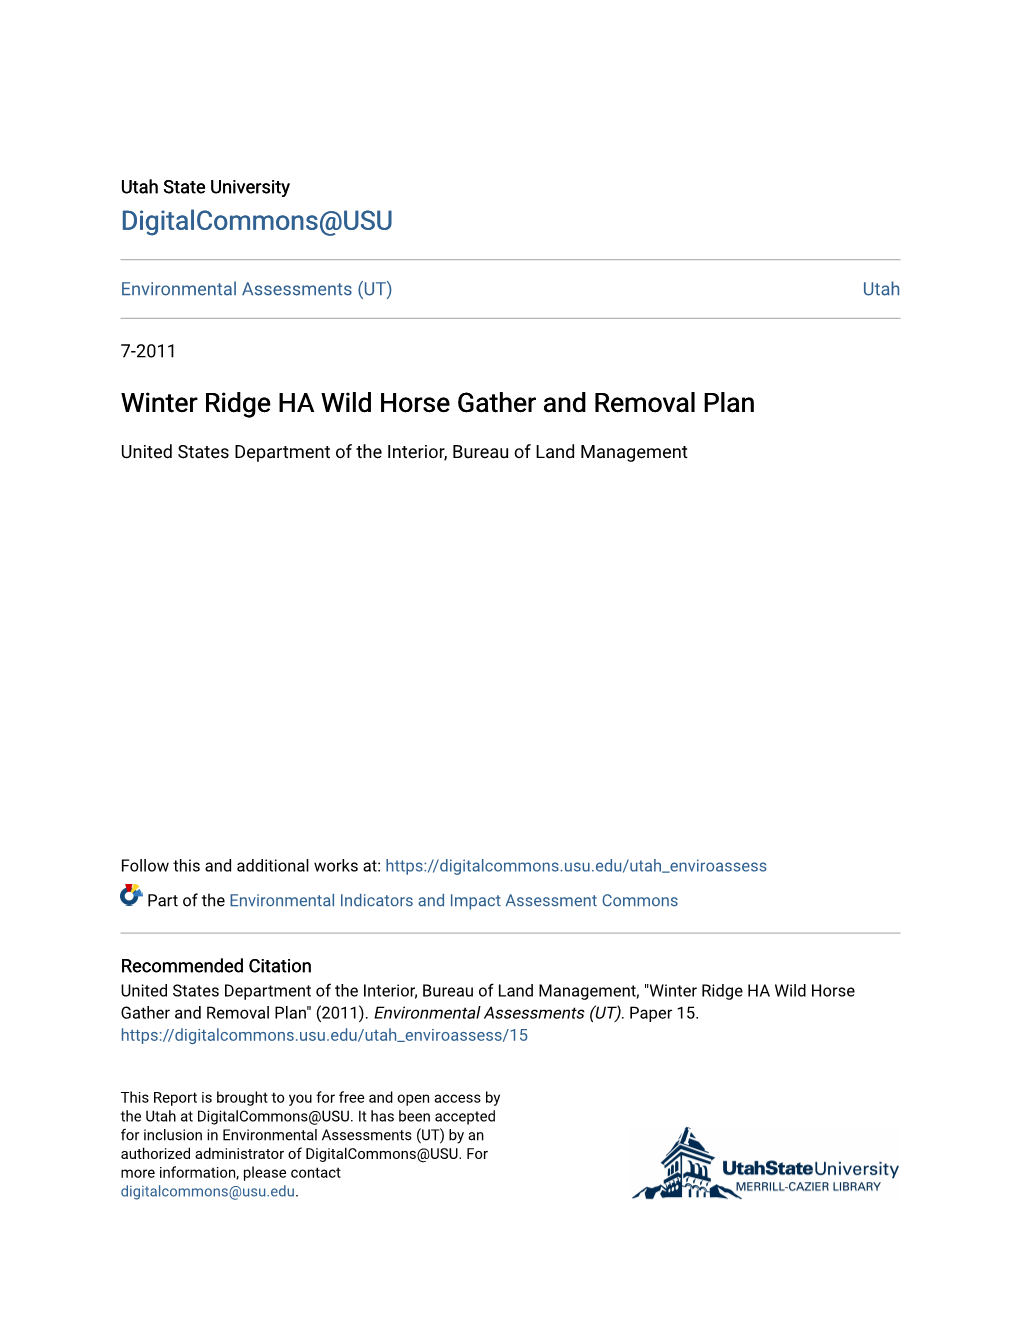 Winter Ridge HA Wild Horse Gather and Removal Plan